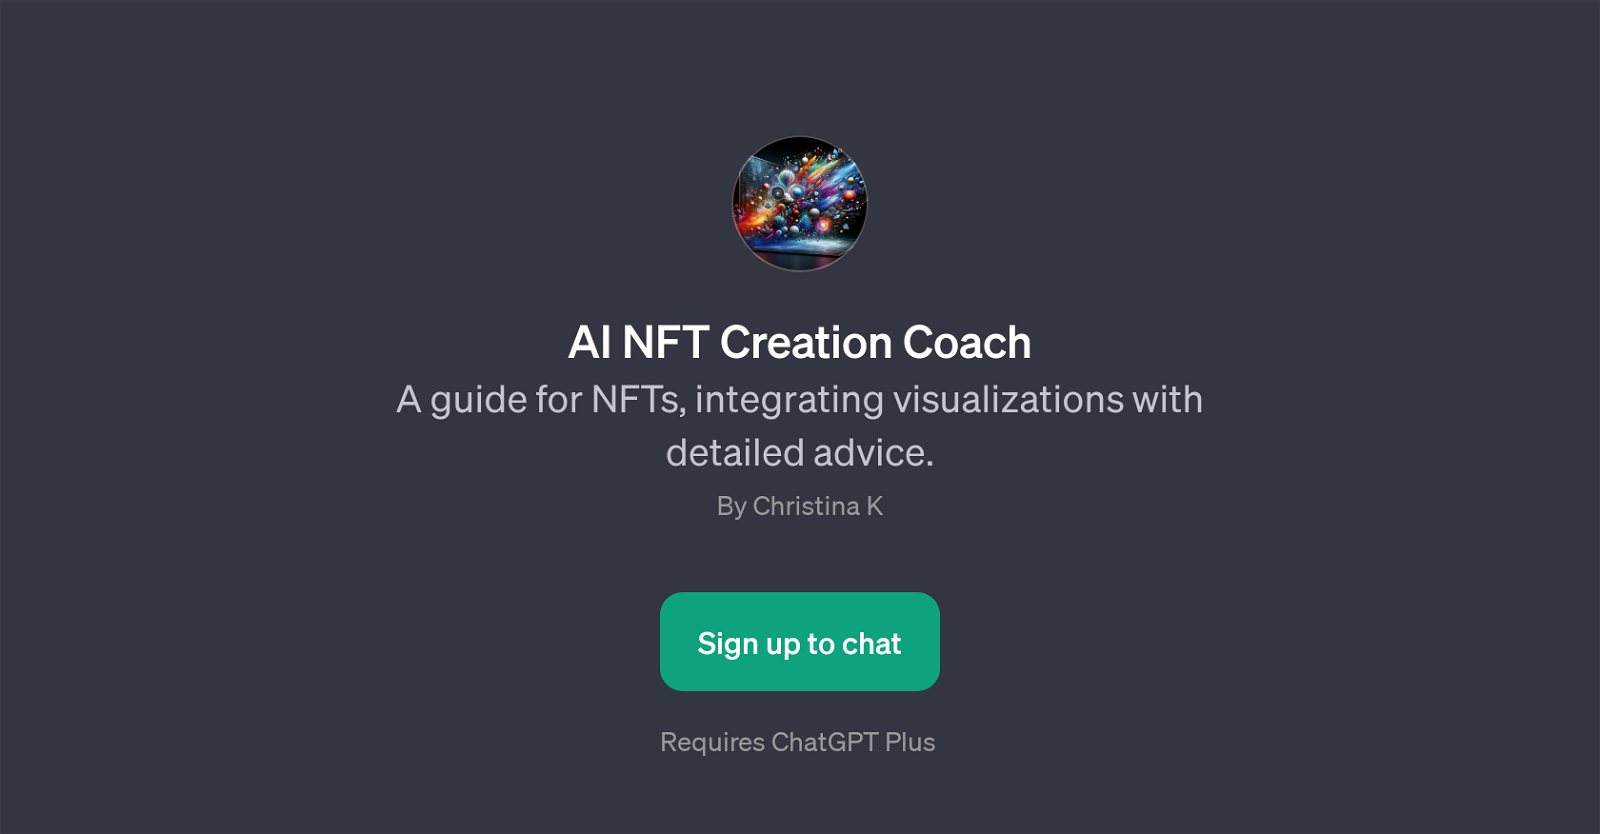 AI NFT Creation Coach website